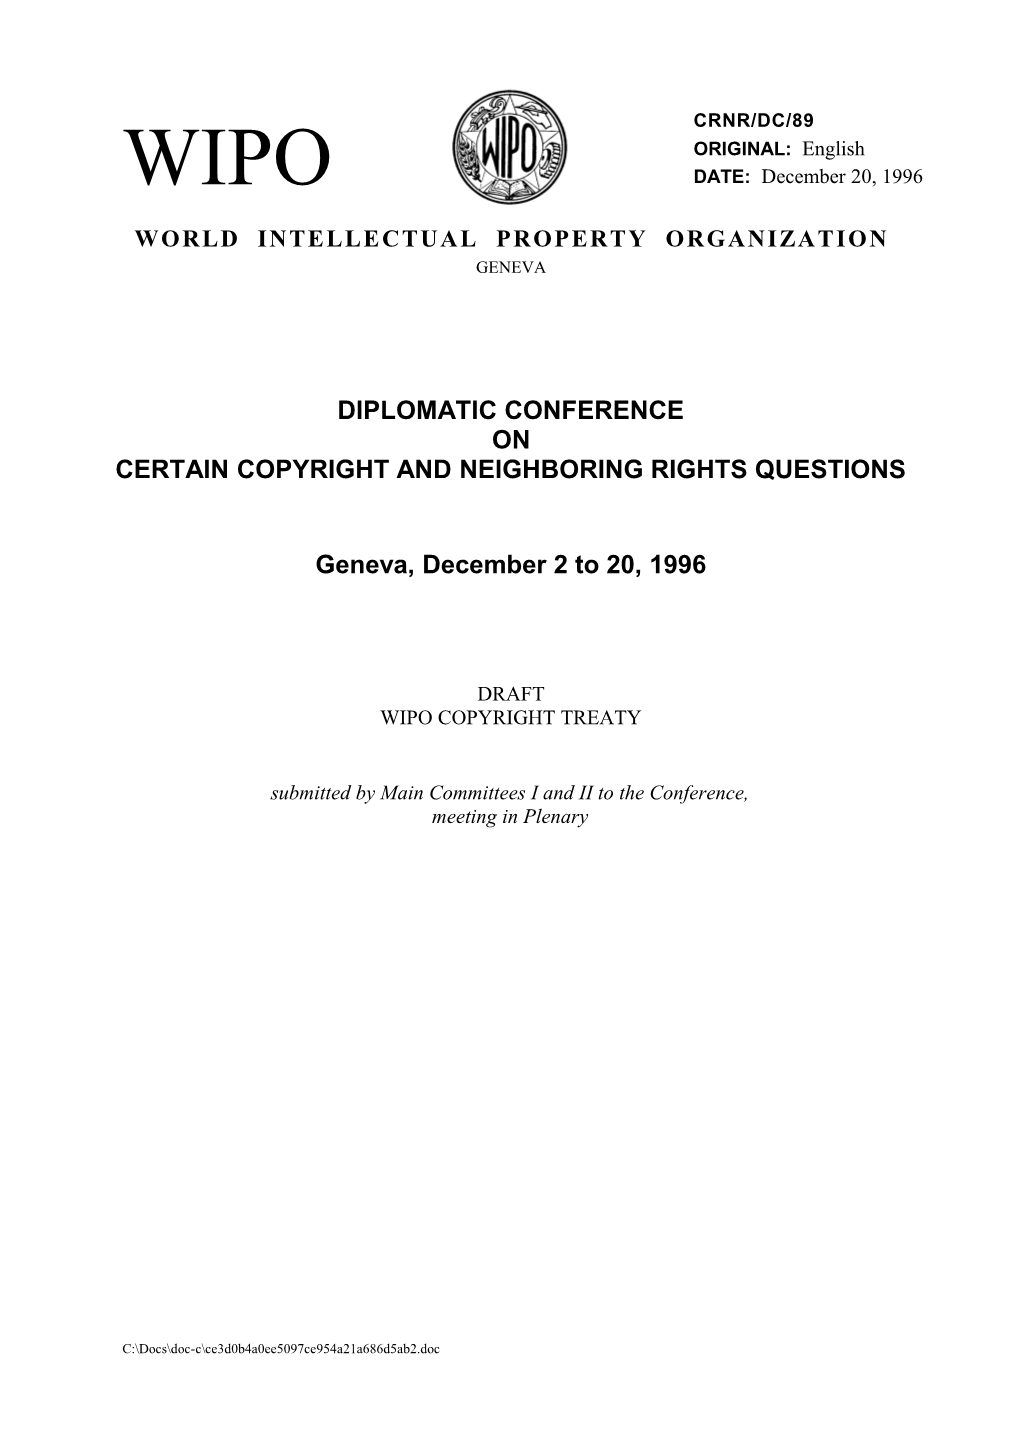 CRNR/DC/89: Draft WIPO Copyright Treaty